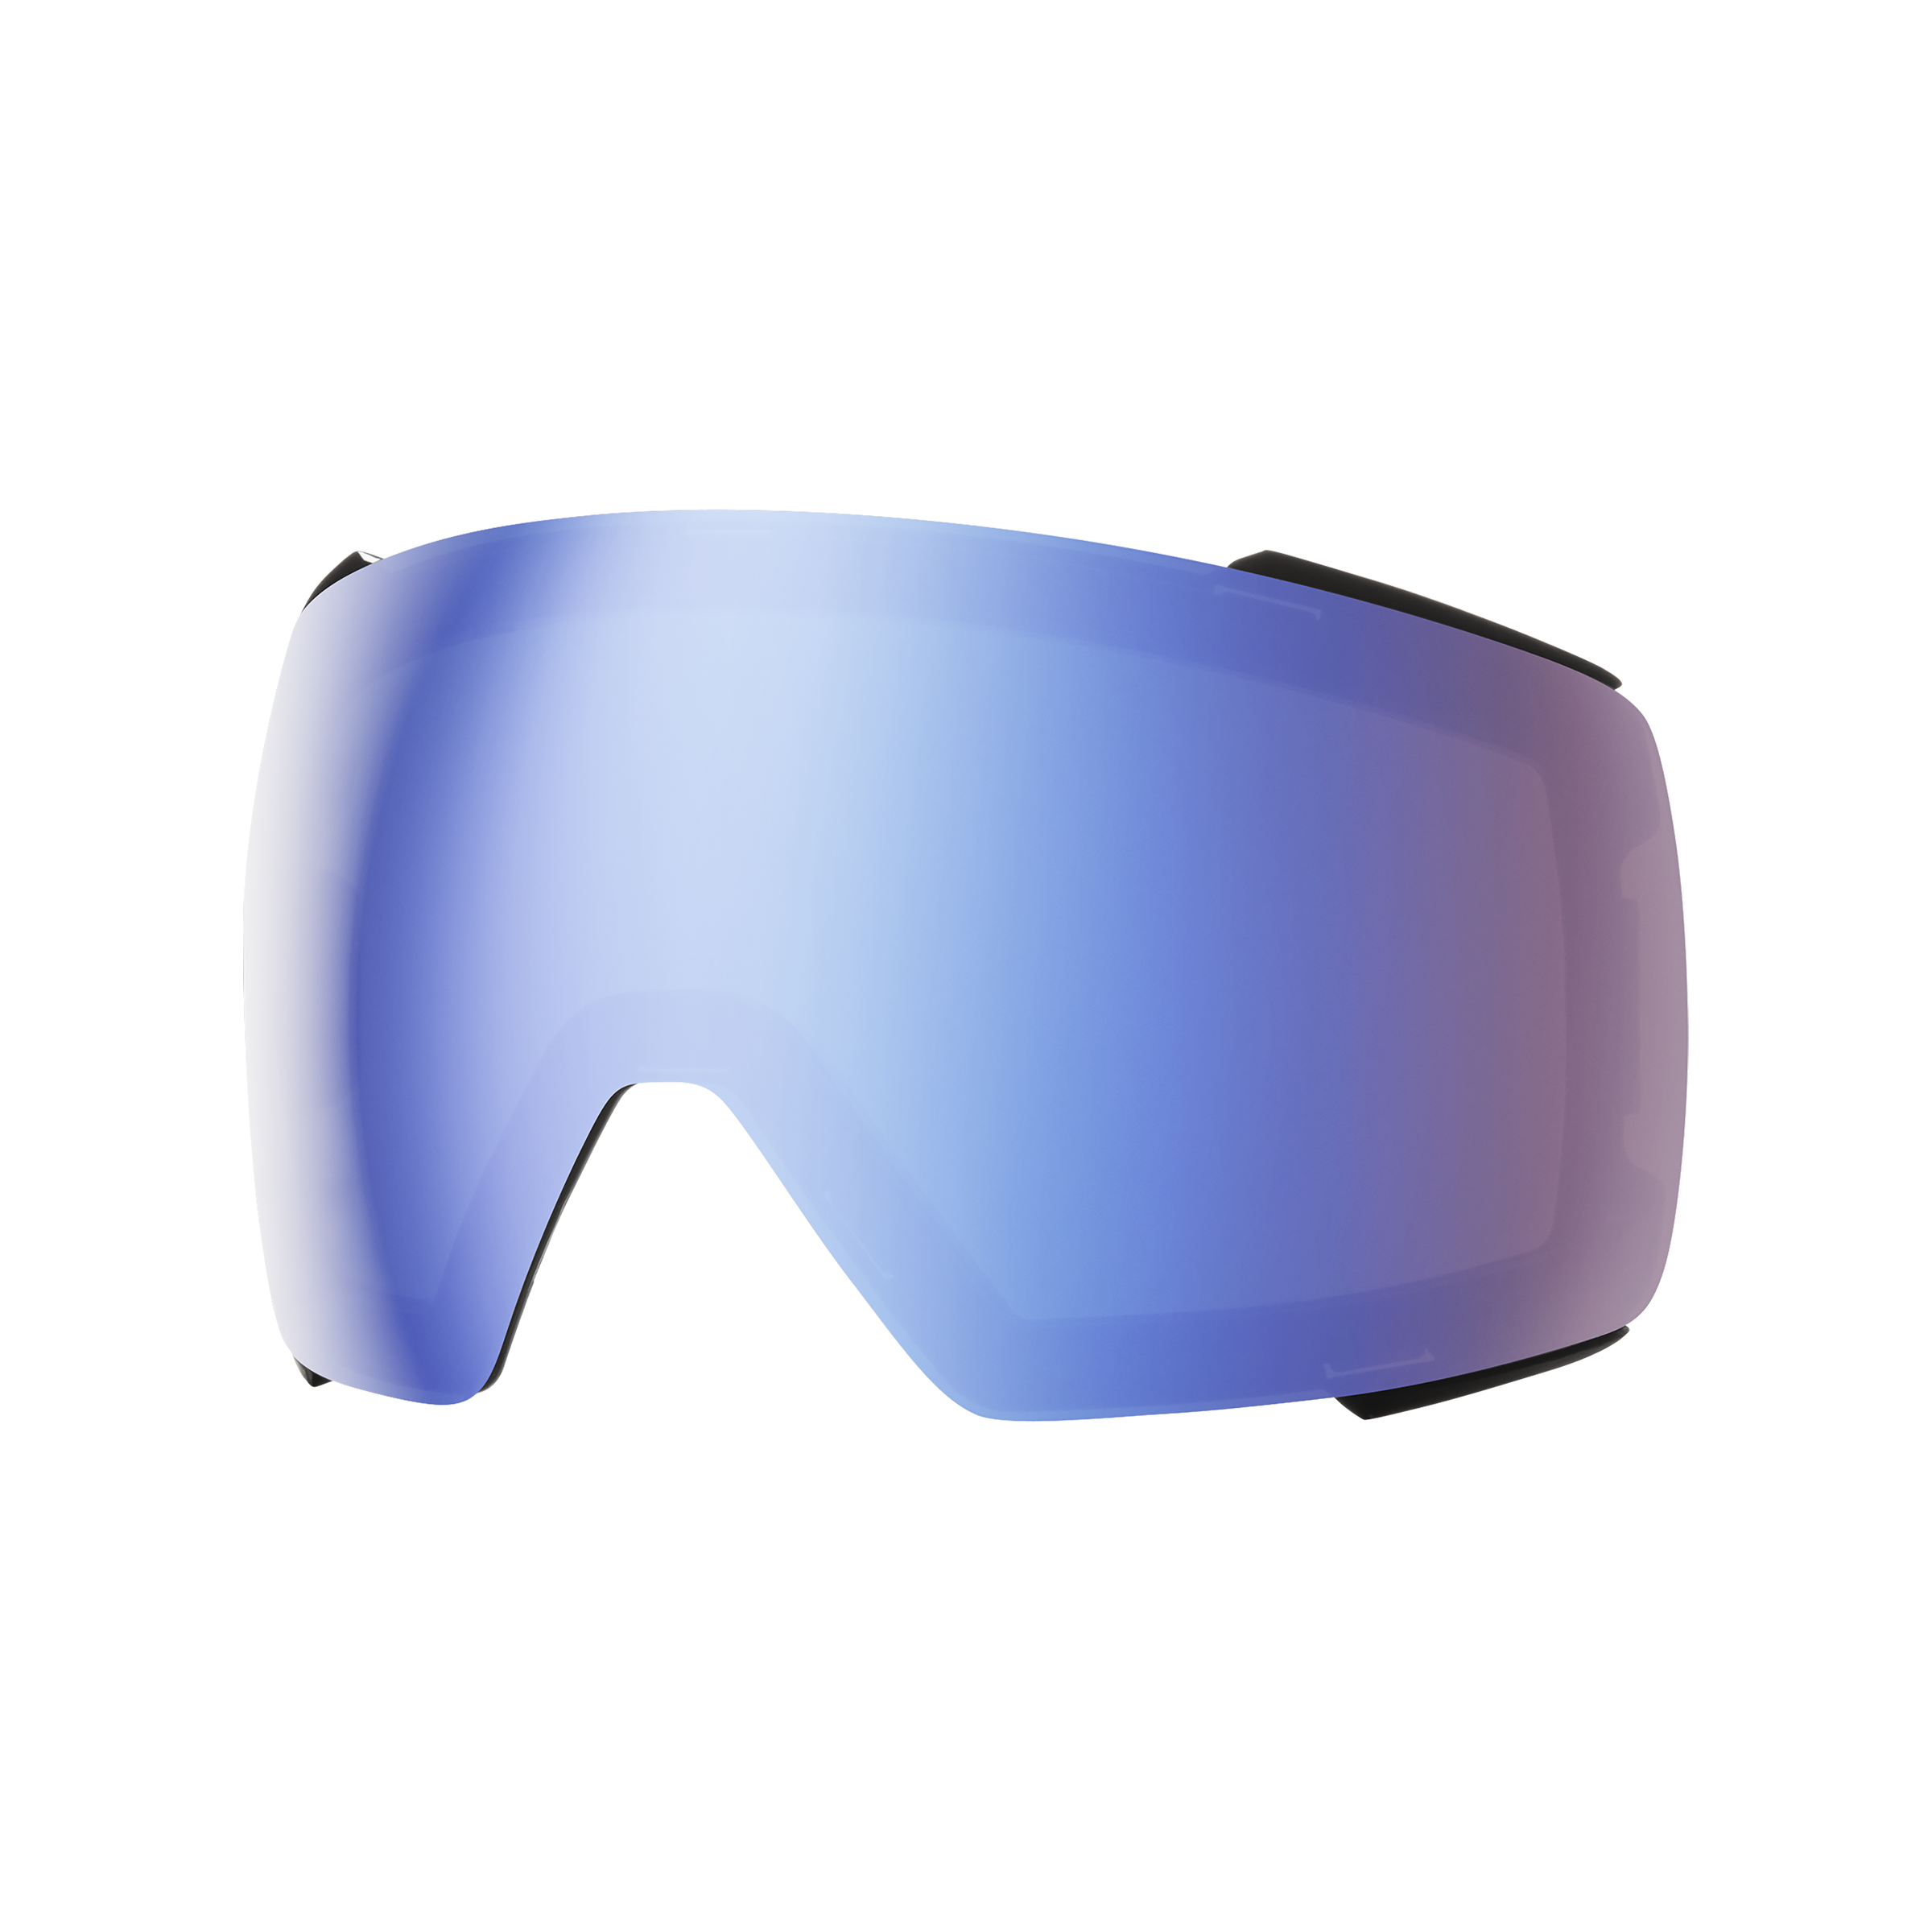 Goggle Replacement Lenses | Smith Optics | US